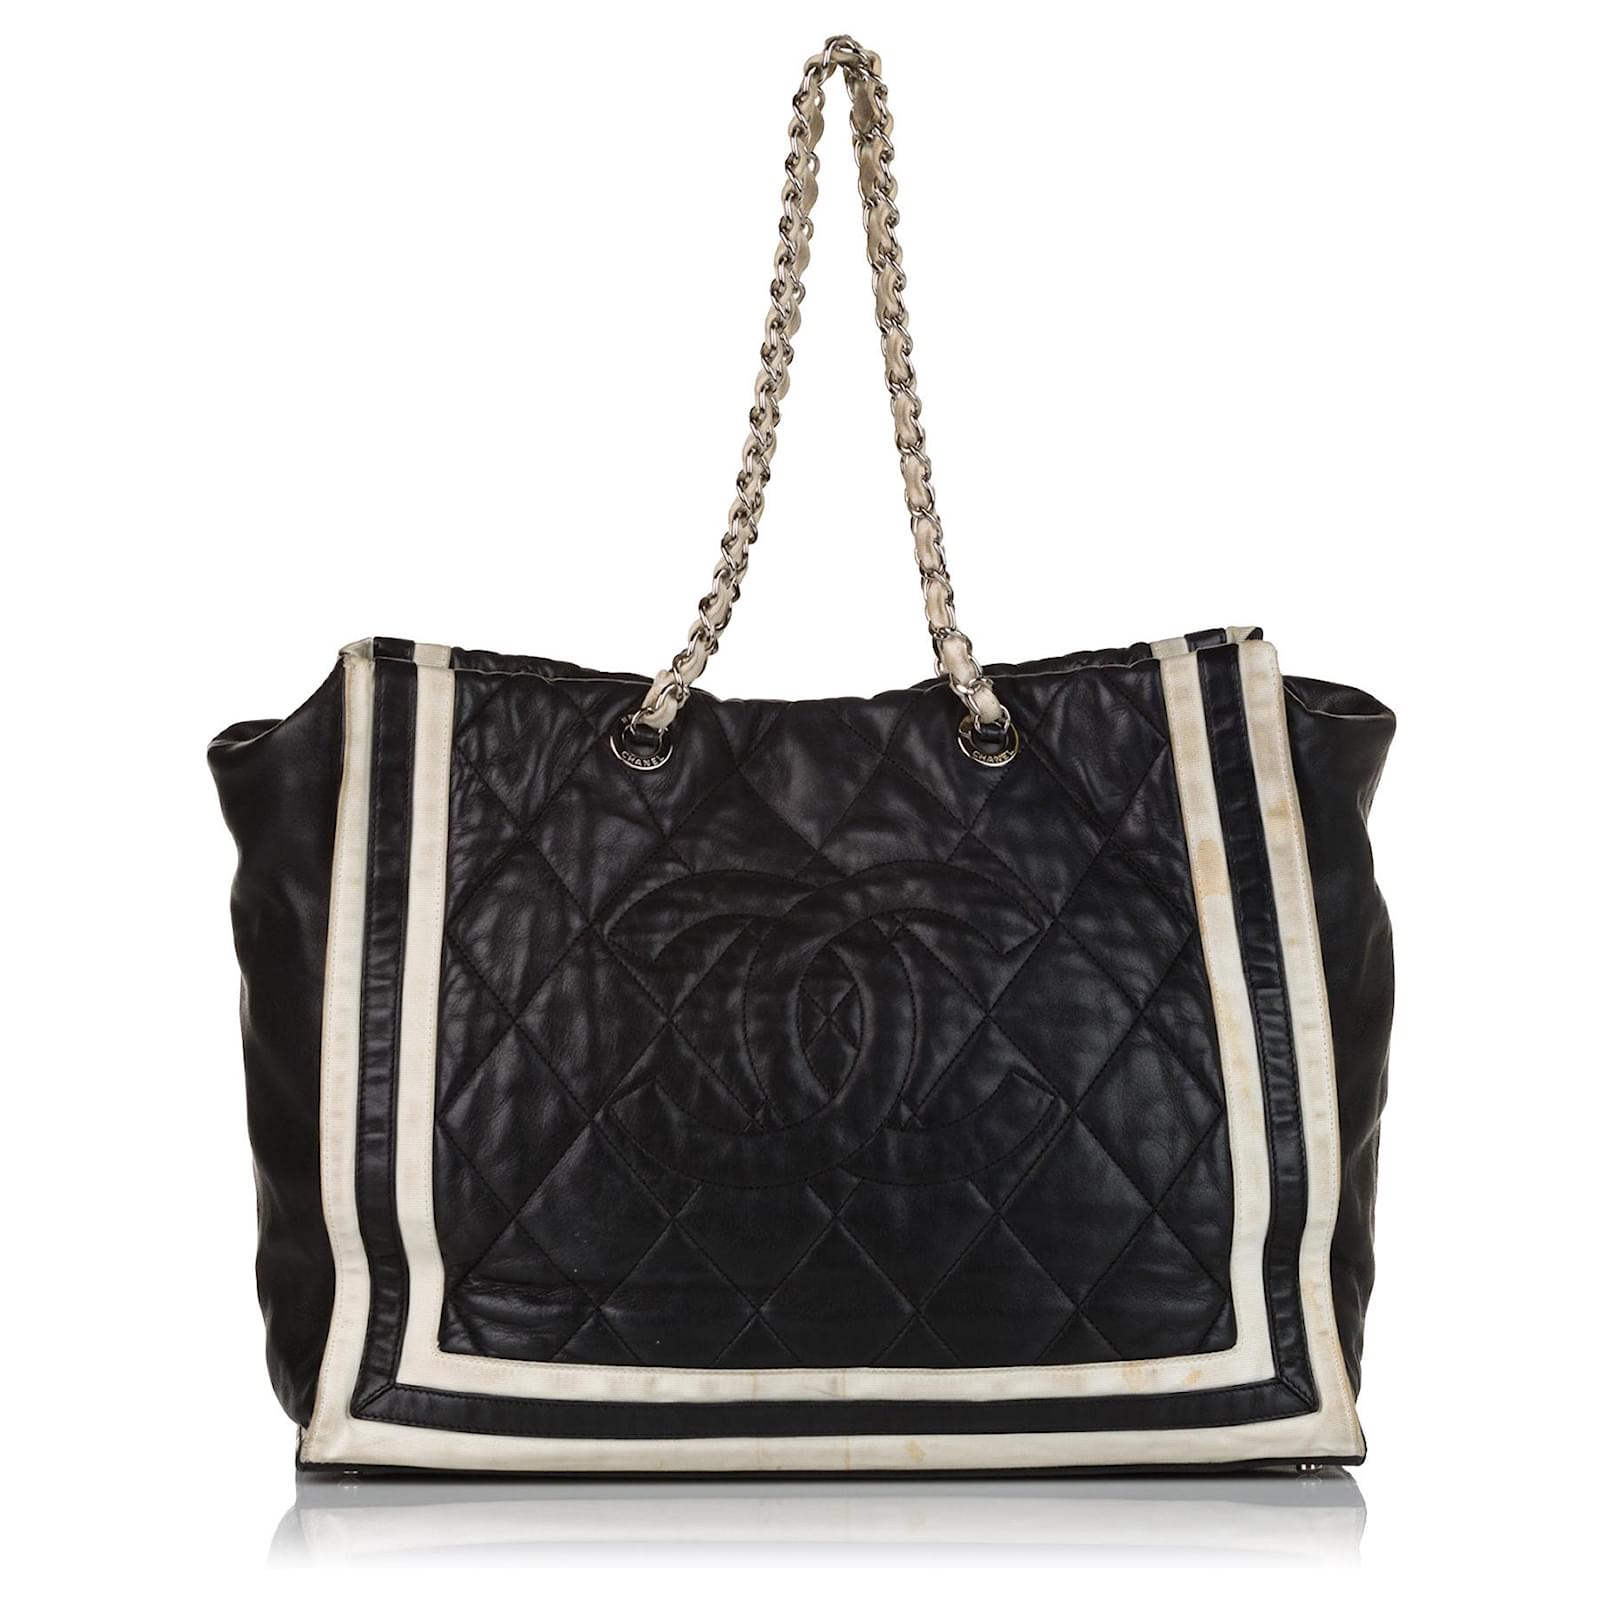 Chanel Black Paris-Venice Lido Tote Bag Leather Pony-style